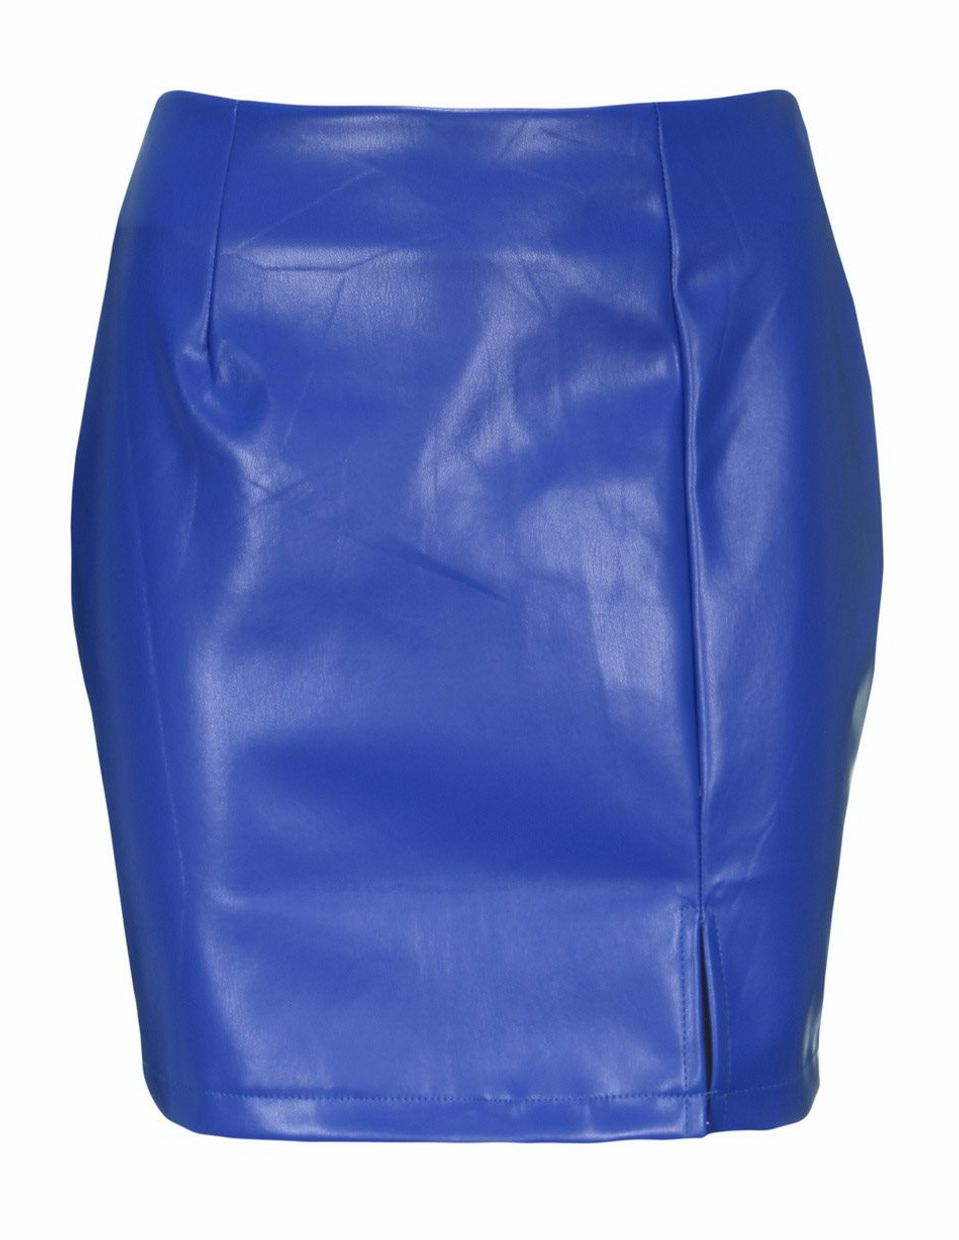 Leather skirt cobalt blauw